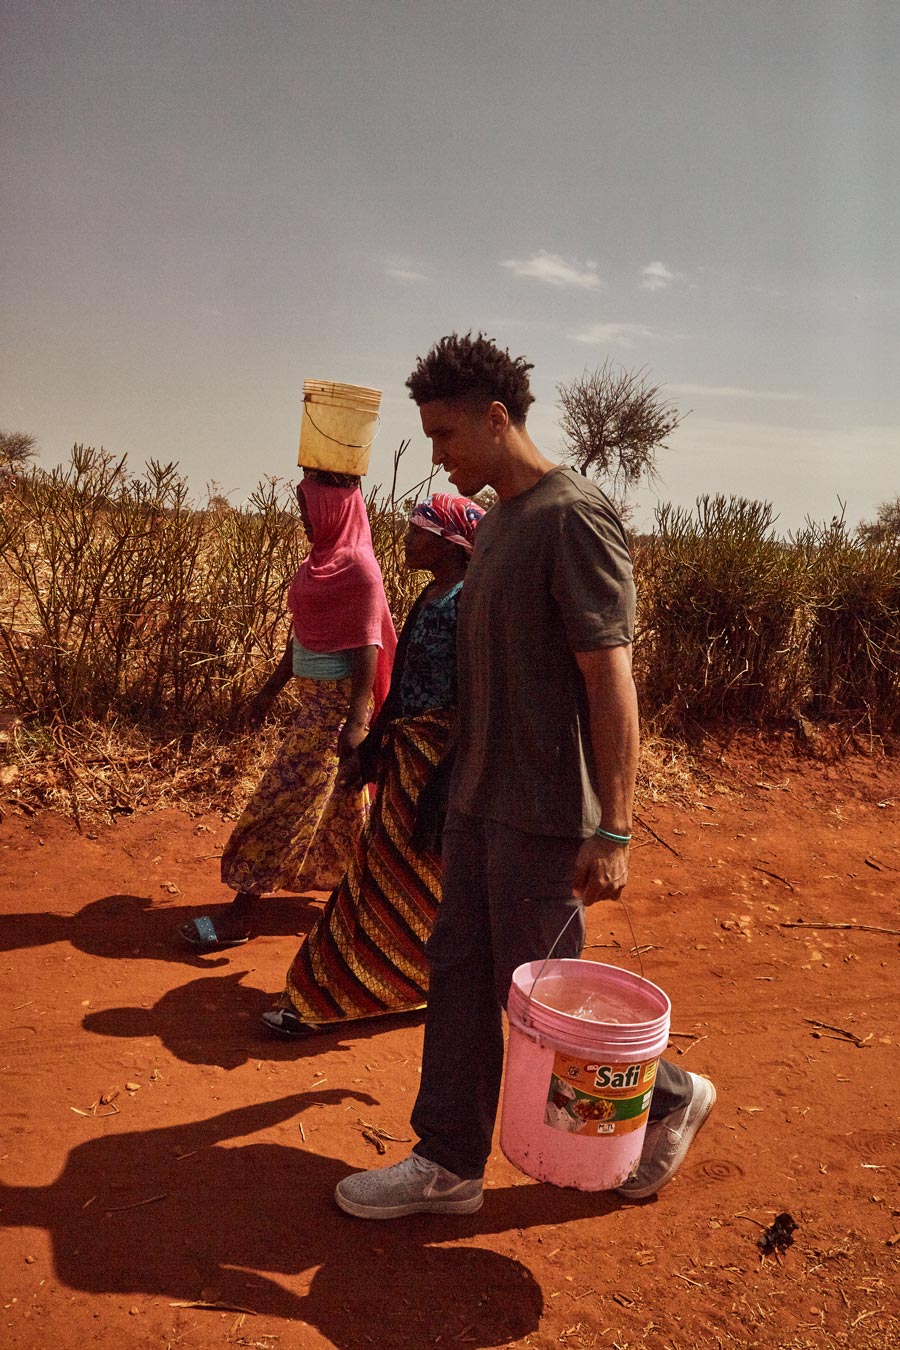 Malcolm Brogdon carrying water in five gallon buckets along side two women in Africa